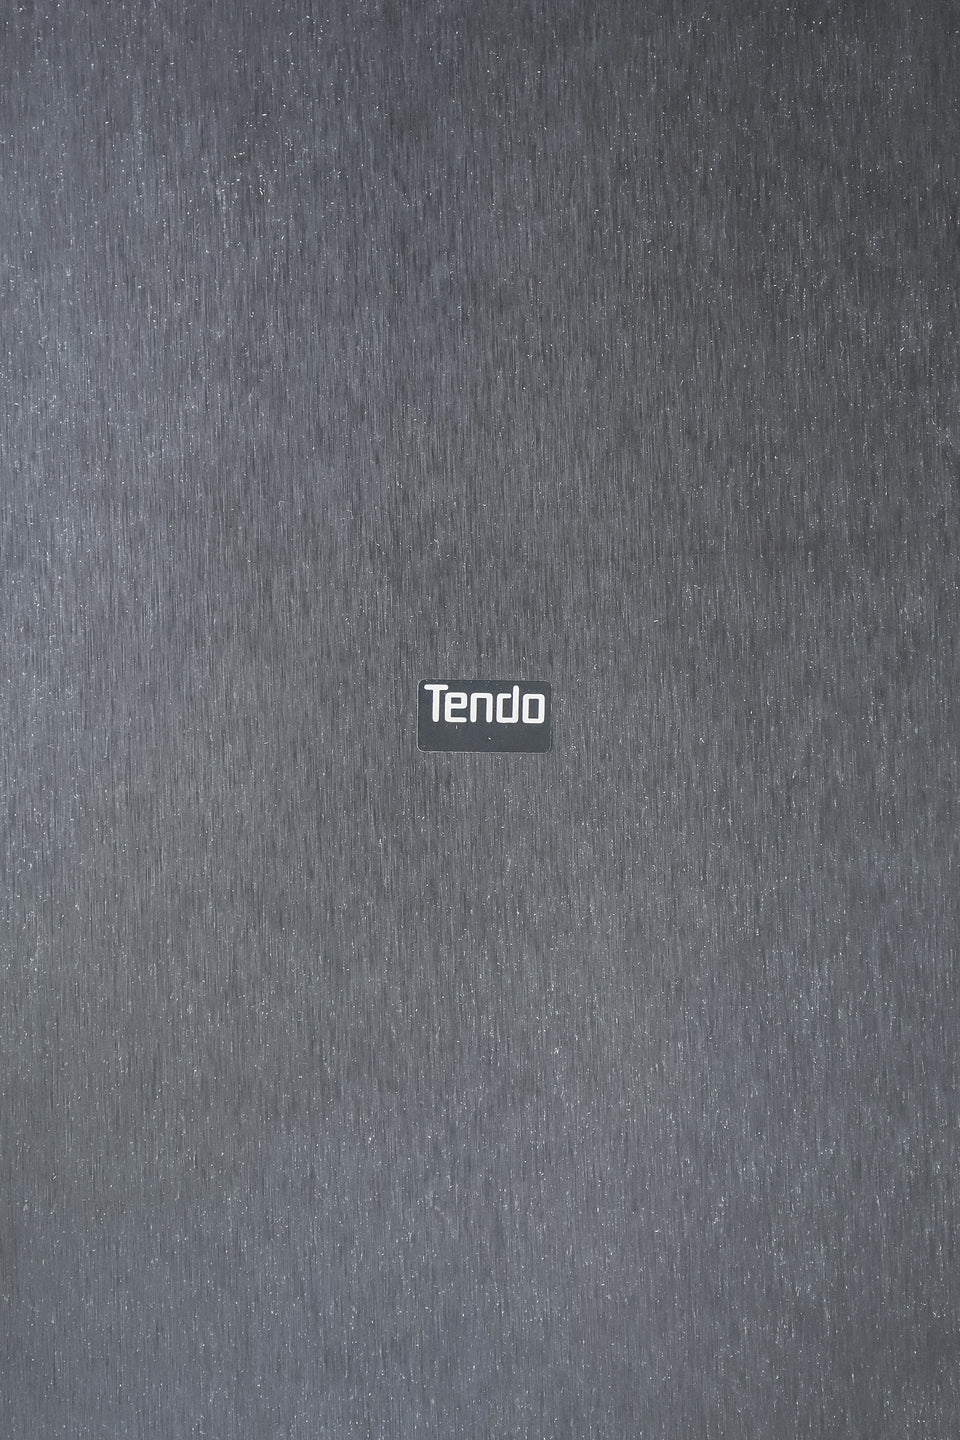 Tendo Antler Dining Table/天童木工 アントラー ダイニングテーブル プライウッド ジャパニーズモダン